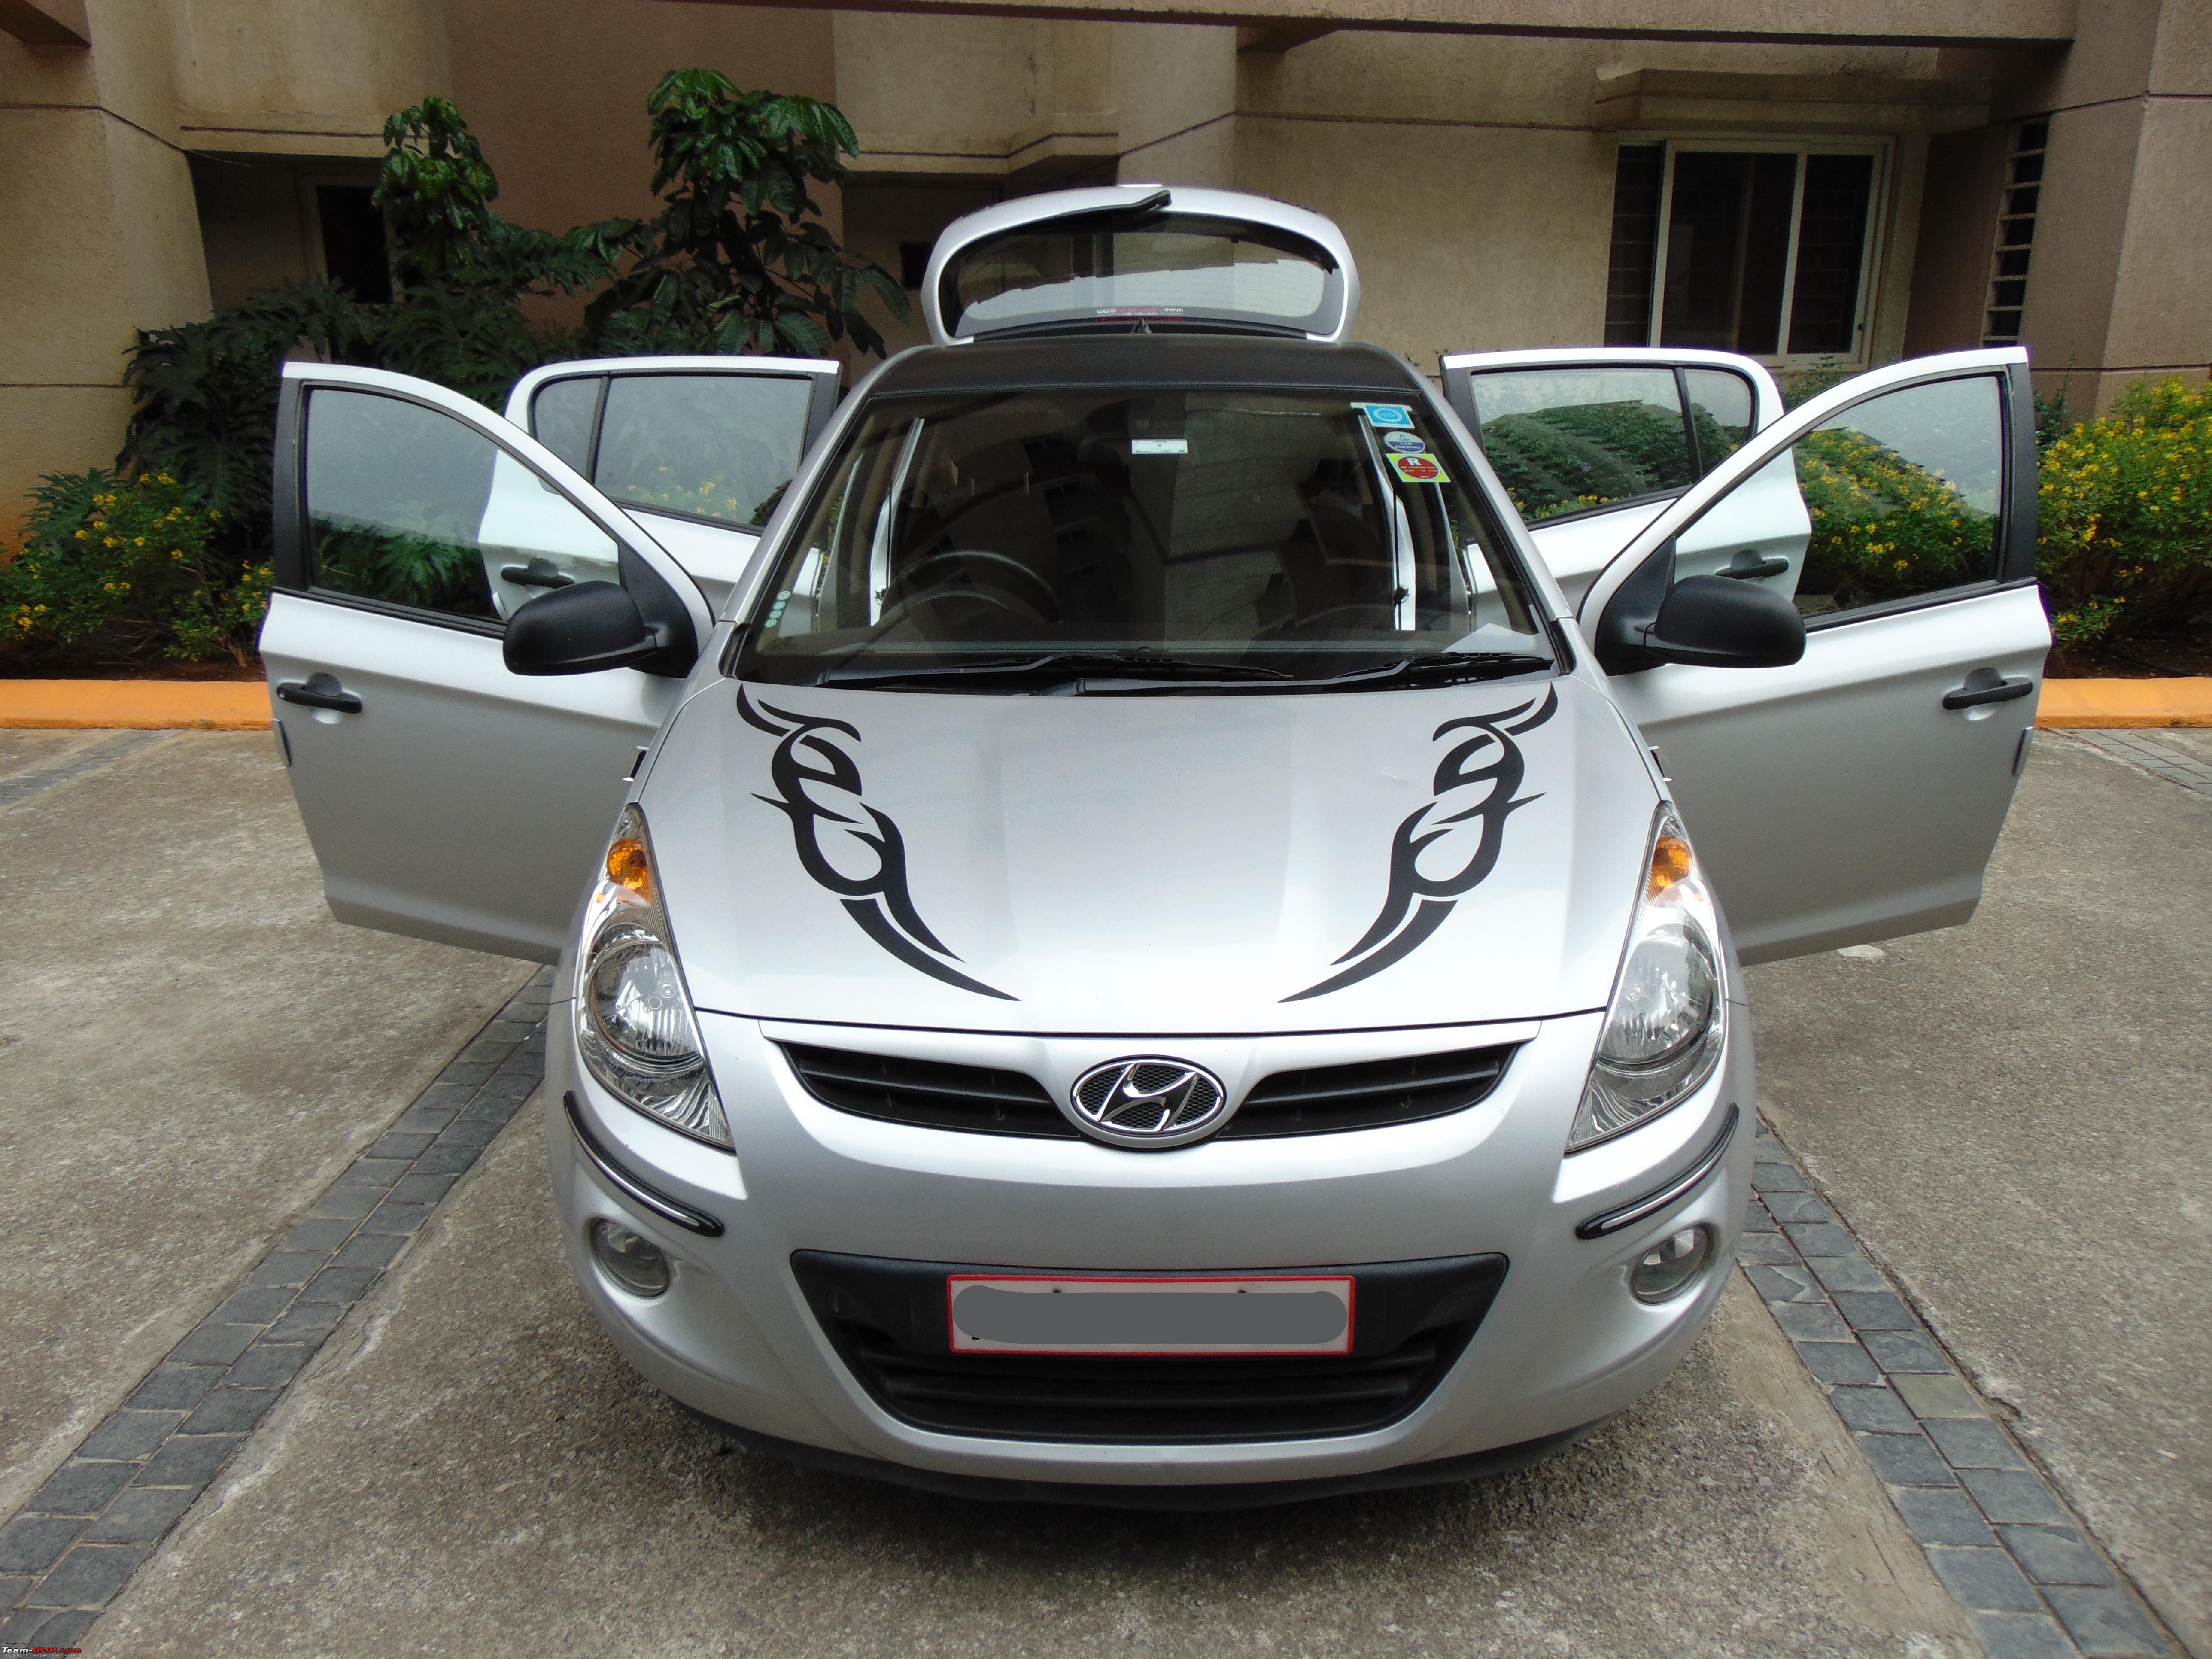 1st-gen Hyundai i20 (2008 - 2014) : Review - Page 65 - Team-BHP